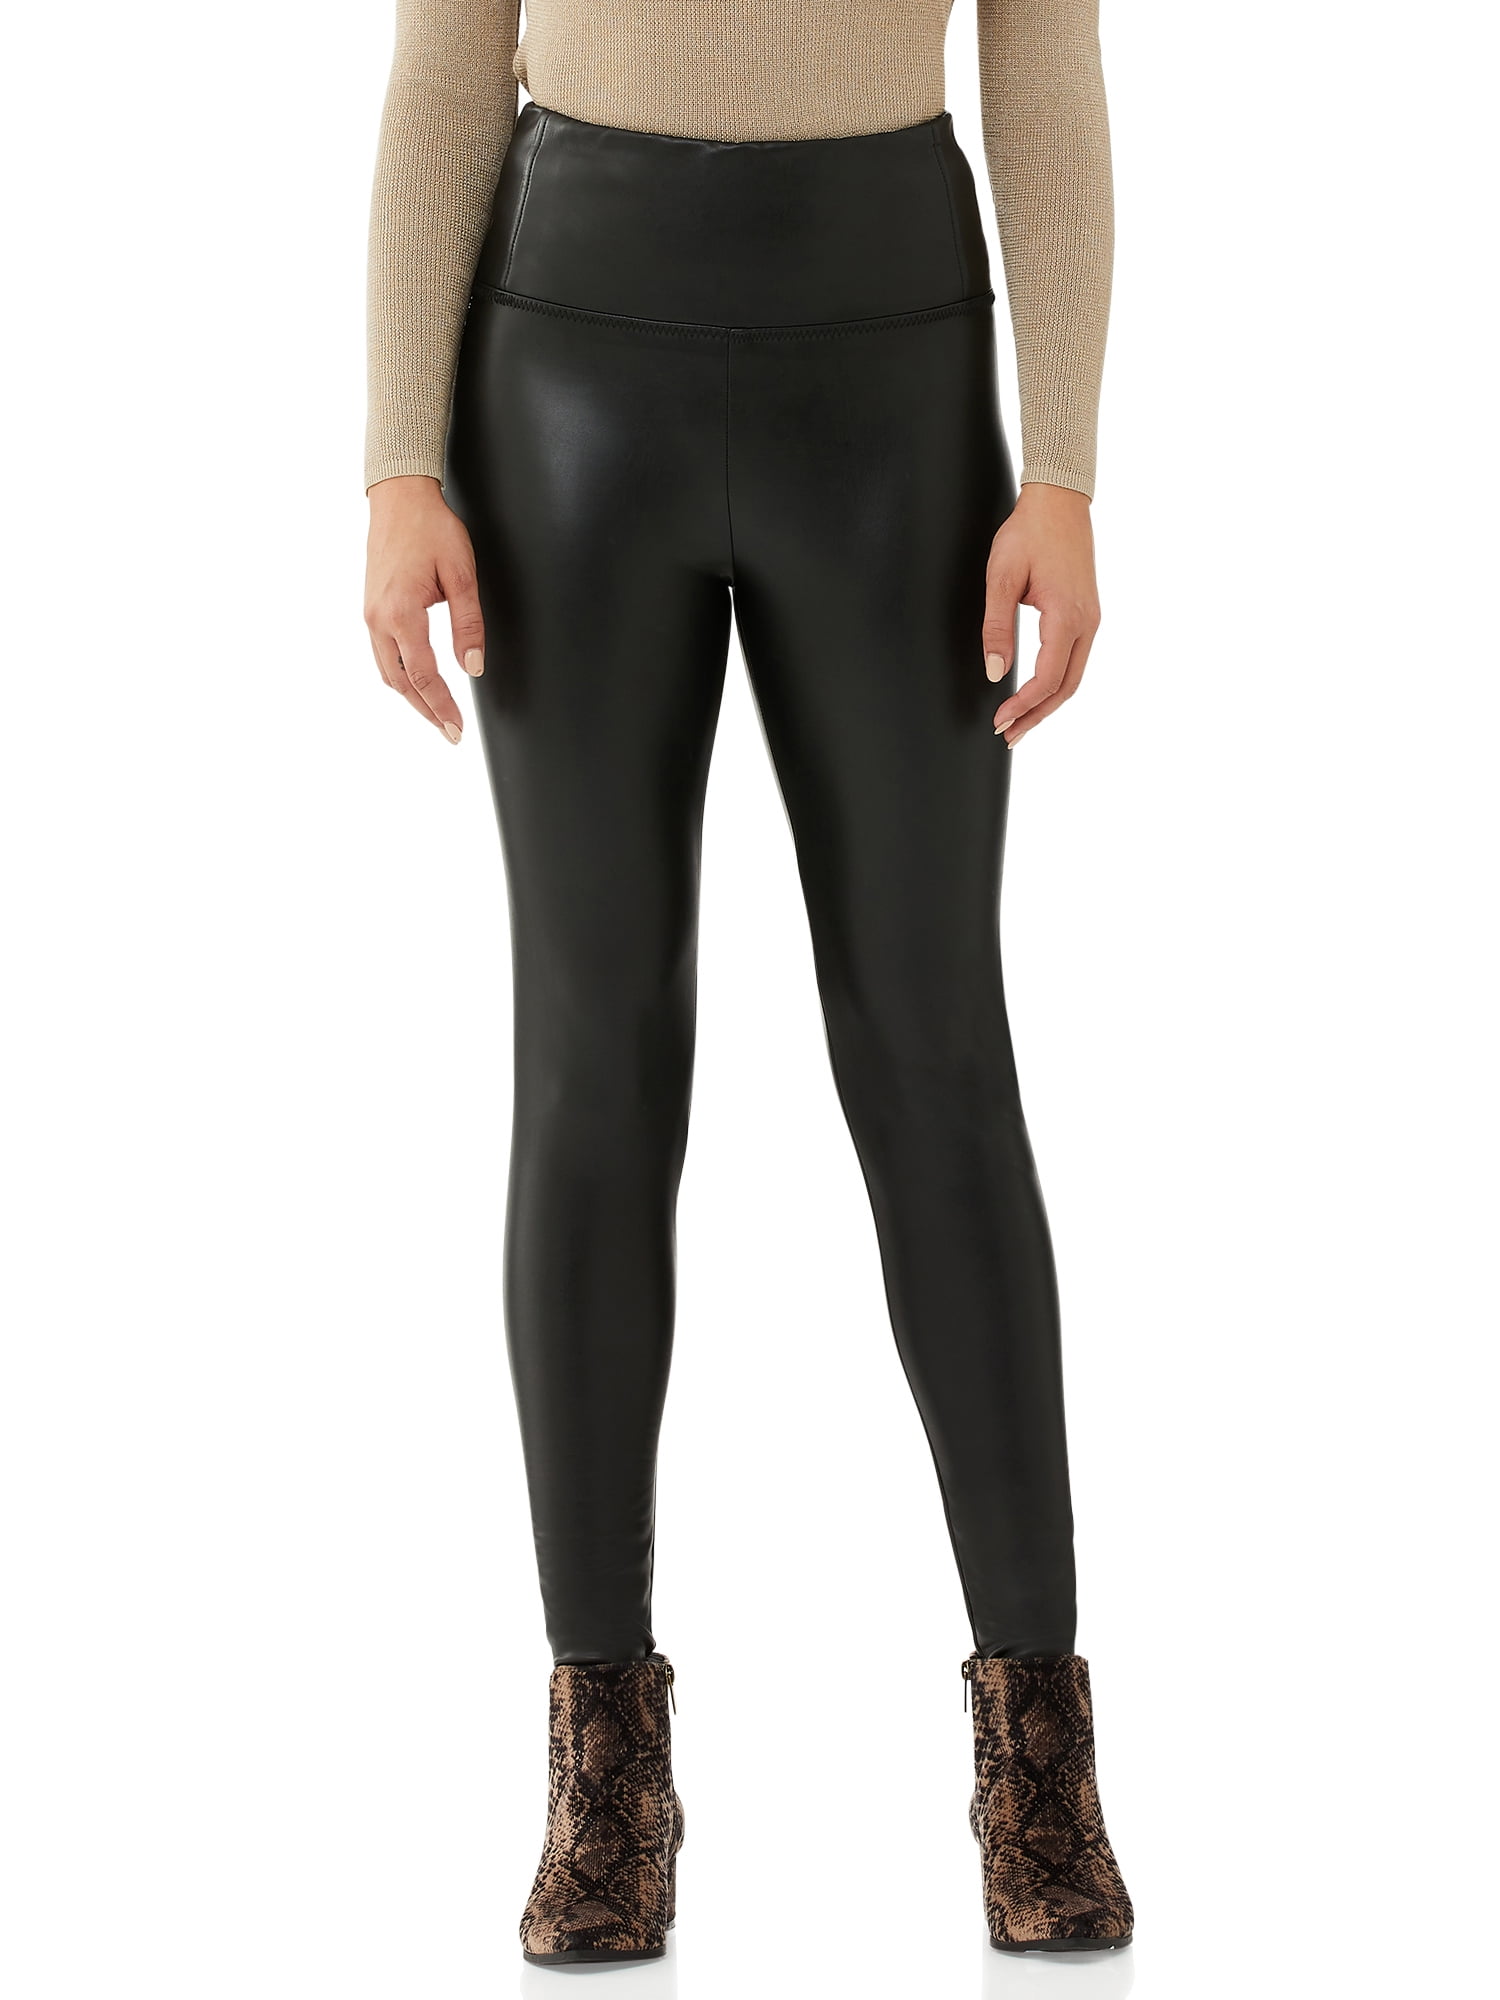 Best Leather Pants For Women 2020 | POPSUGAR Fashion UK